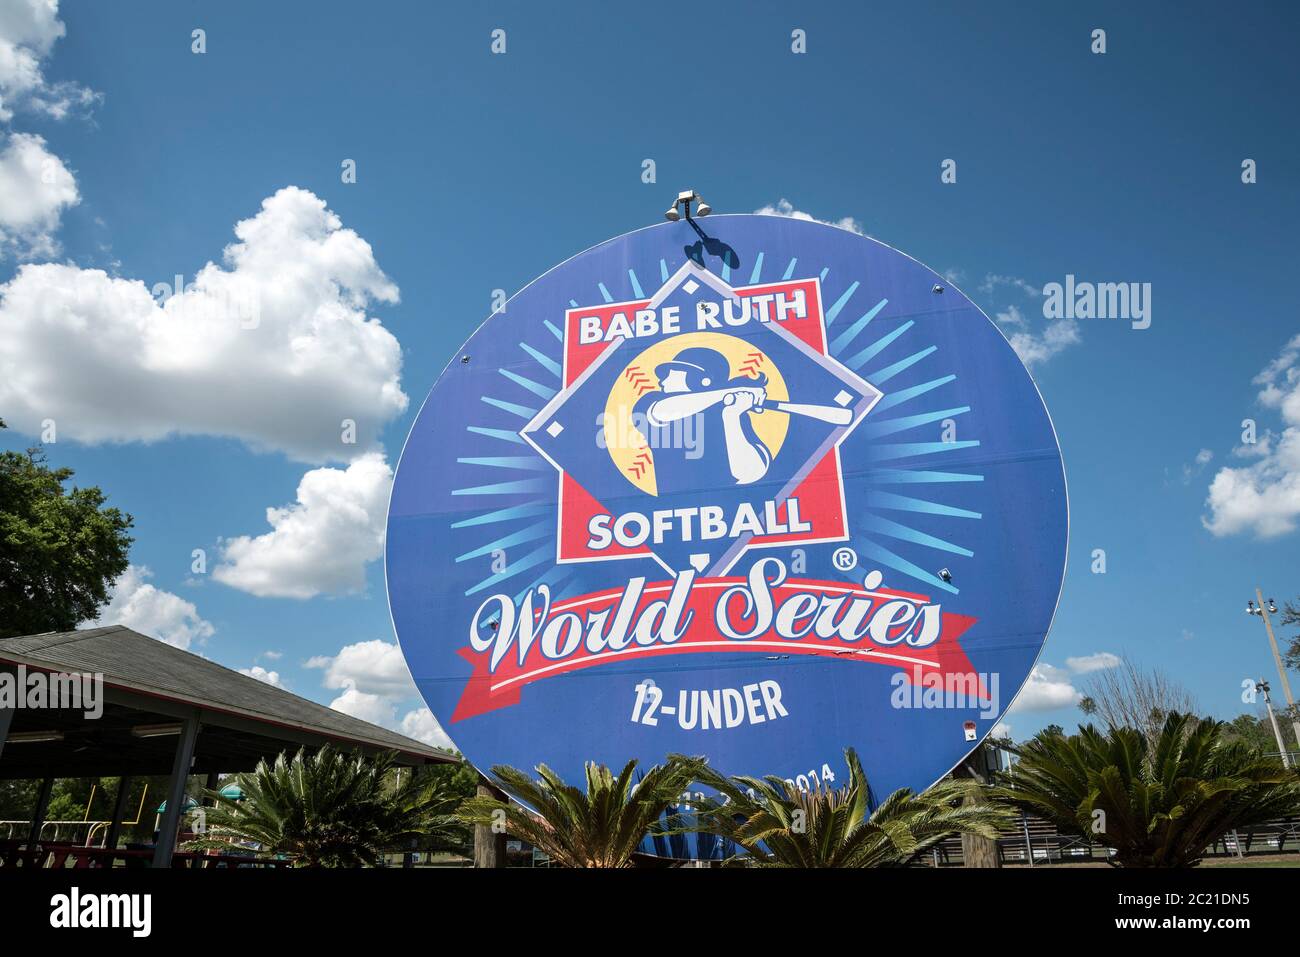 Babe Ruth Softball World Series wurde für mehrere Jahre im Alachua County Hal Brady Sports Complex, in Alachua, Florida statt. Stockfoto